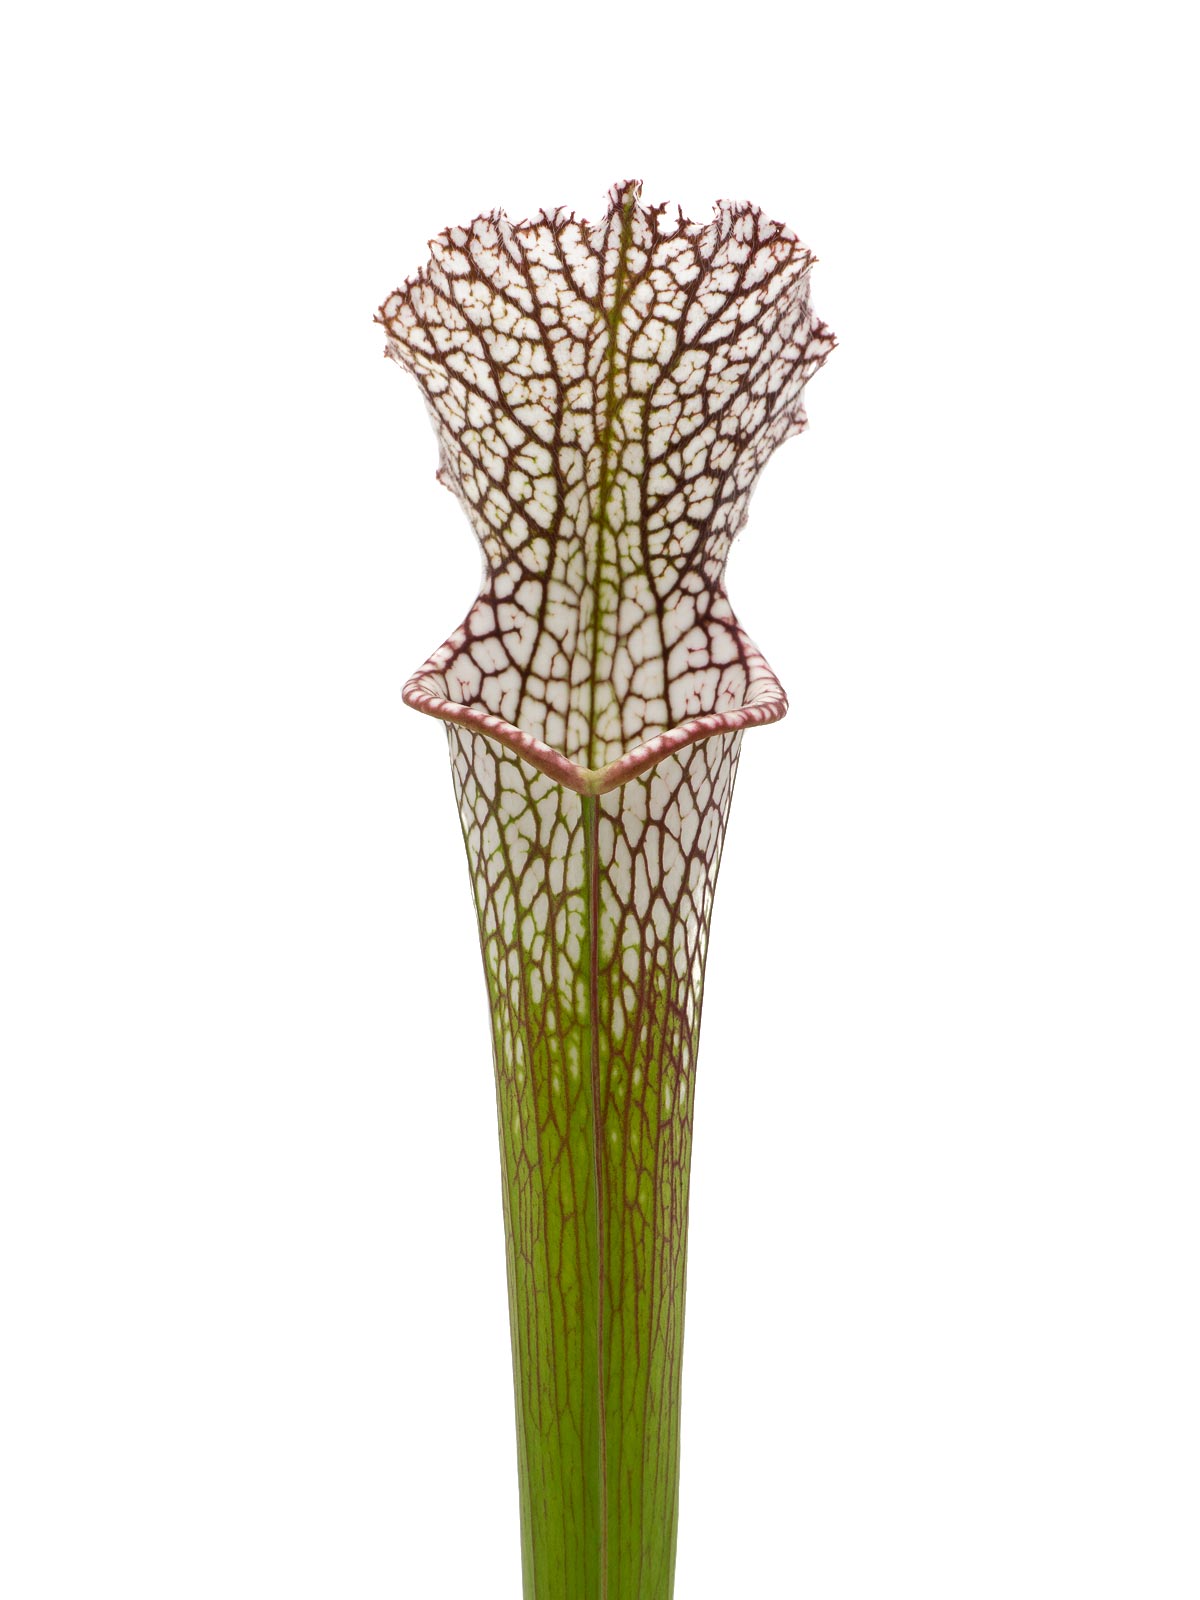 S. leucophylla - KP14, Mirek Srba